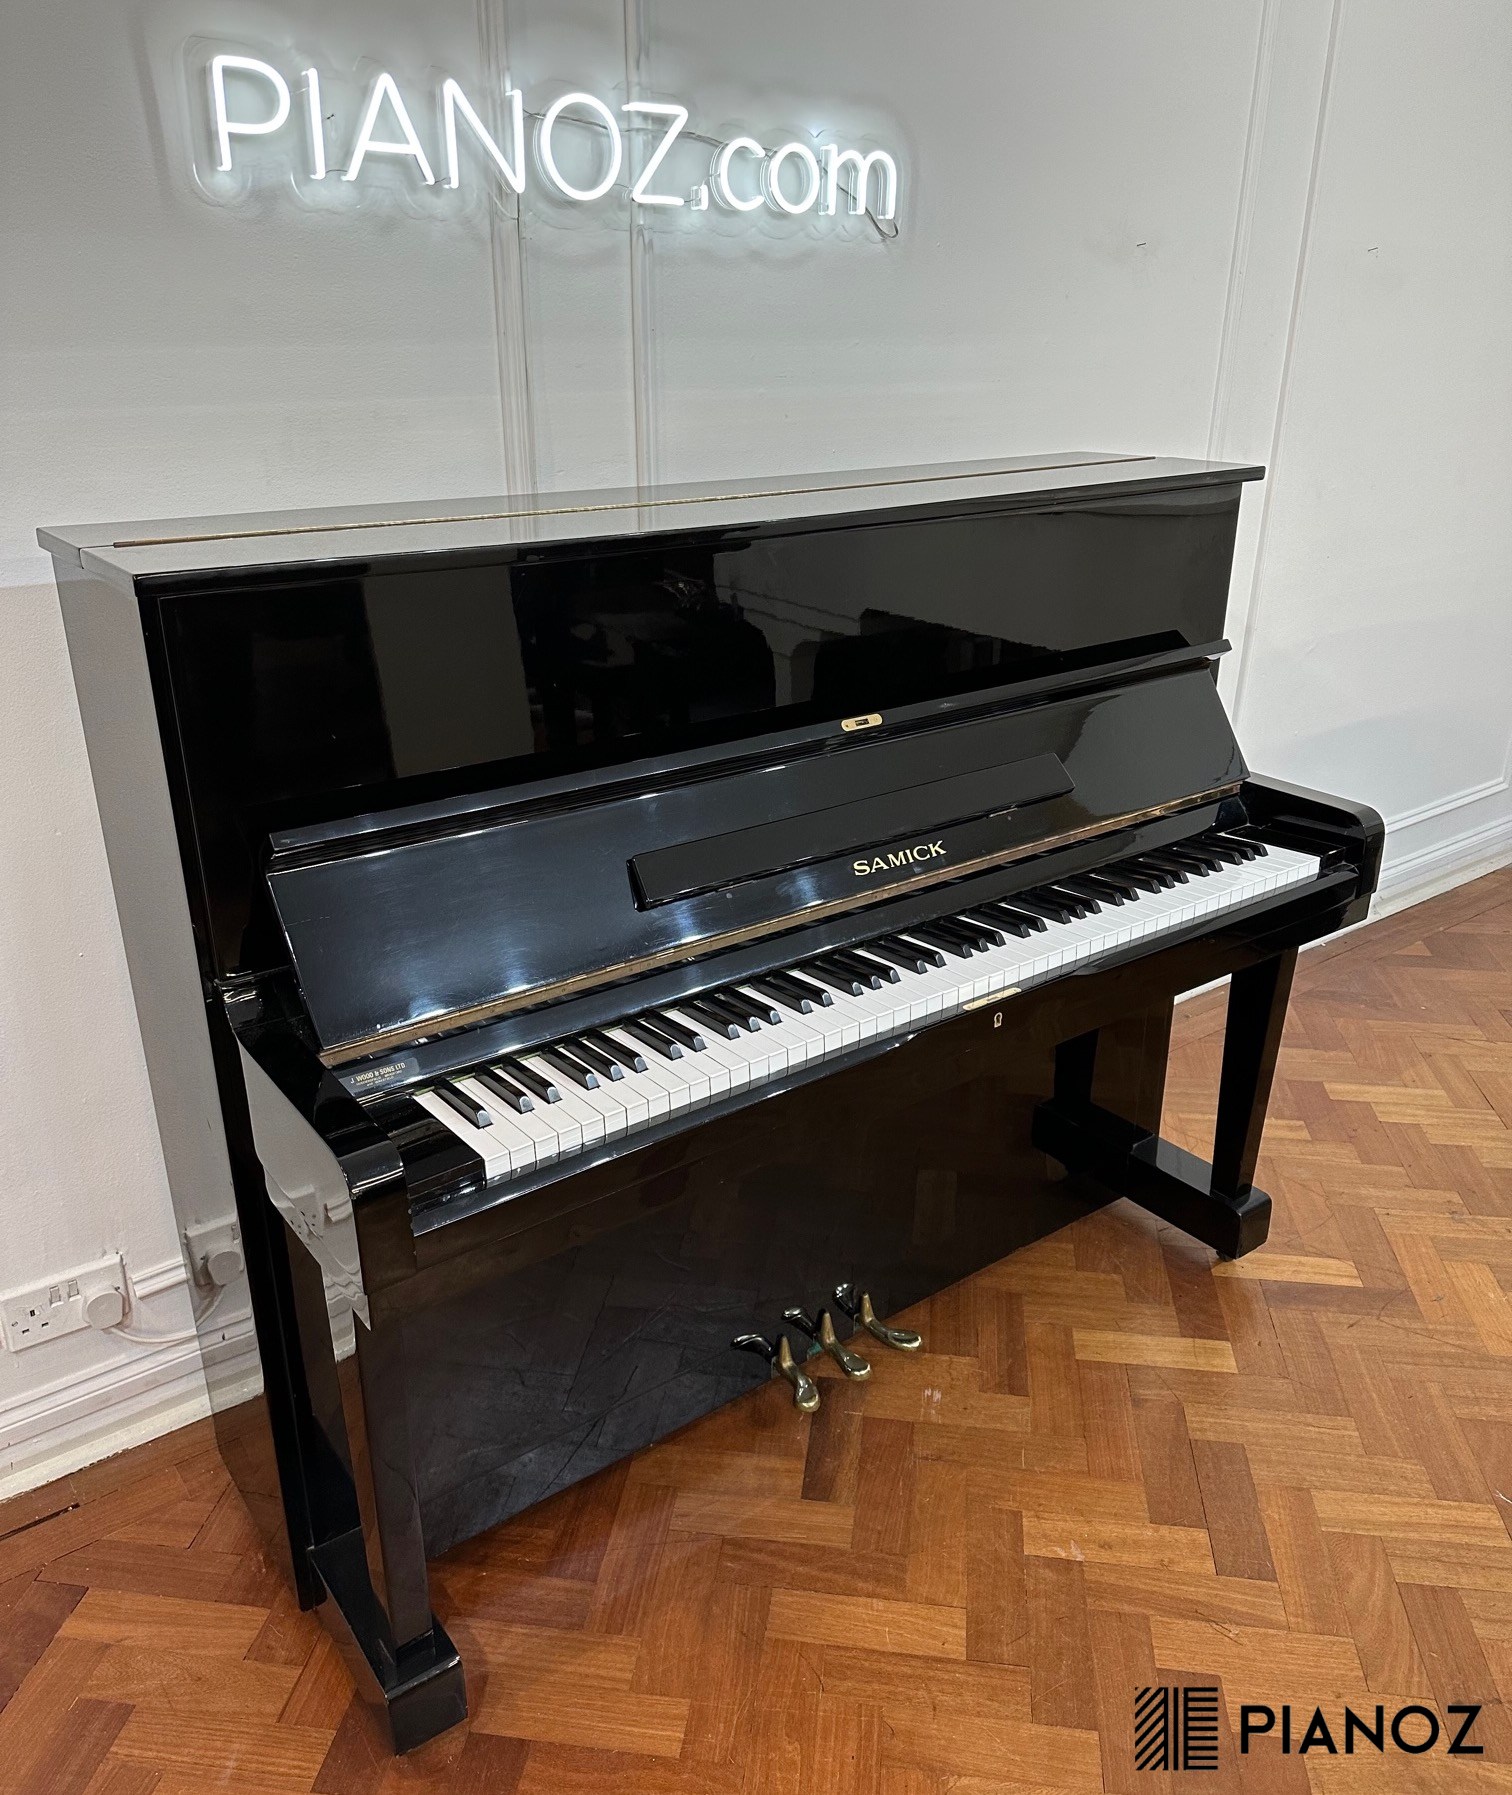 Samick WG5 U1 Size Upright Piano piano for sale in UK